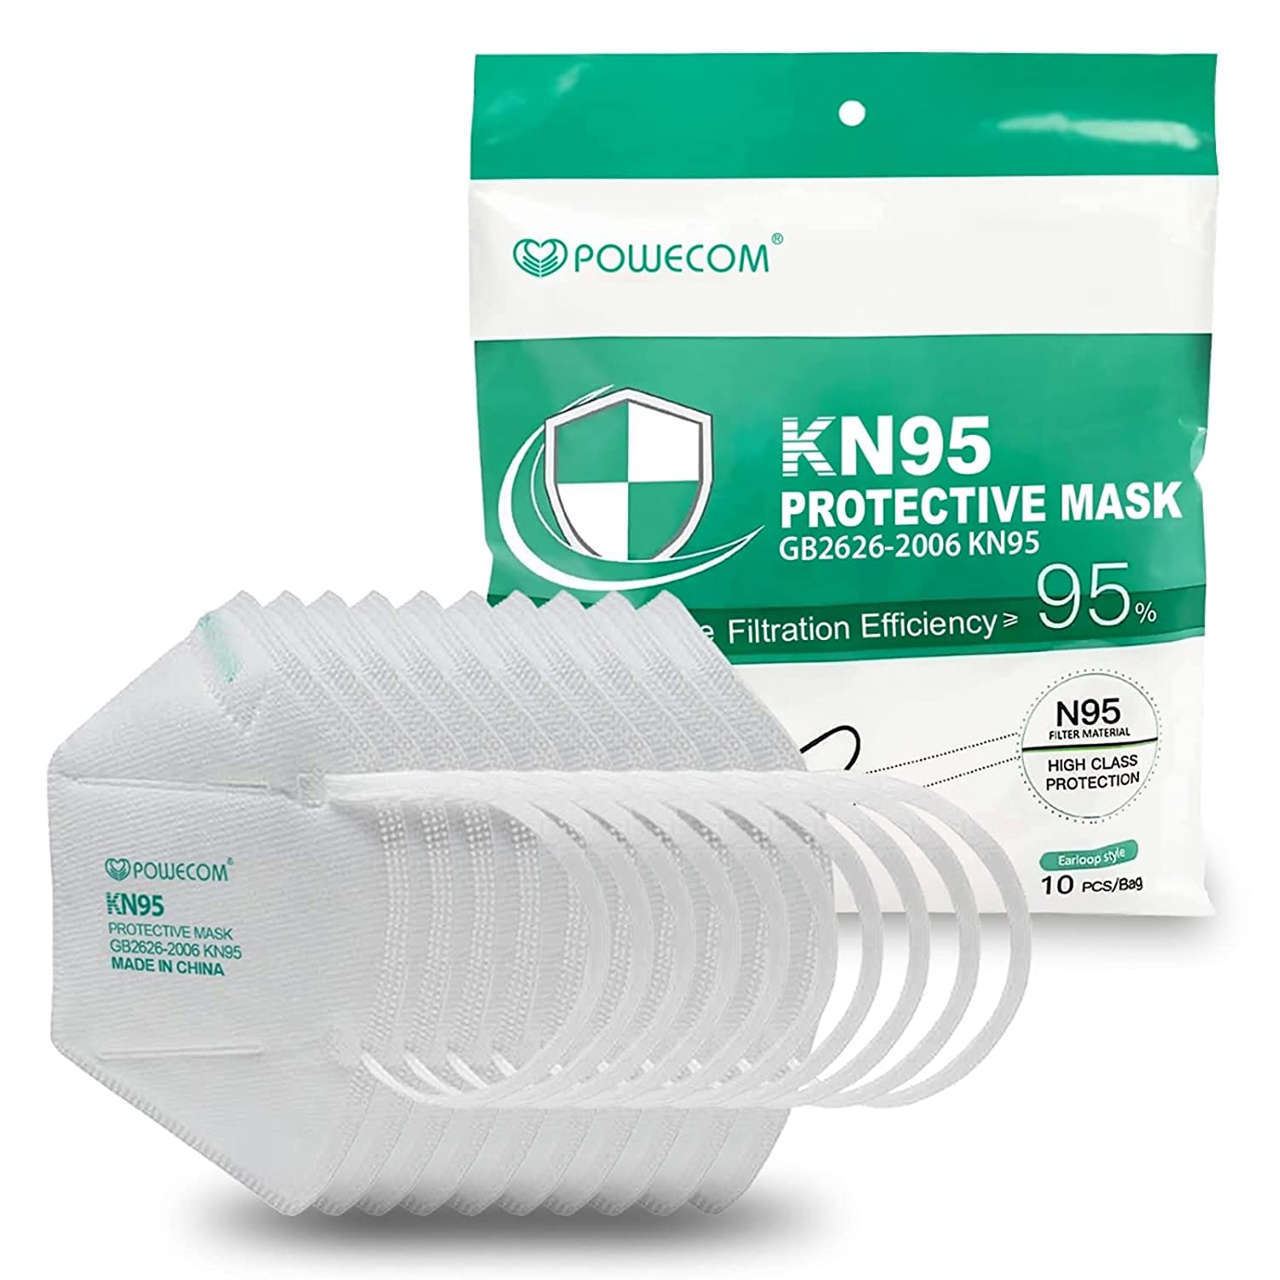 10-Pack Powecom KN95 Respirator Face Masks $5